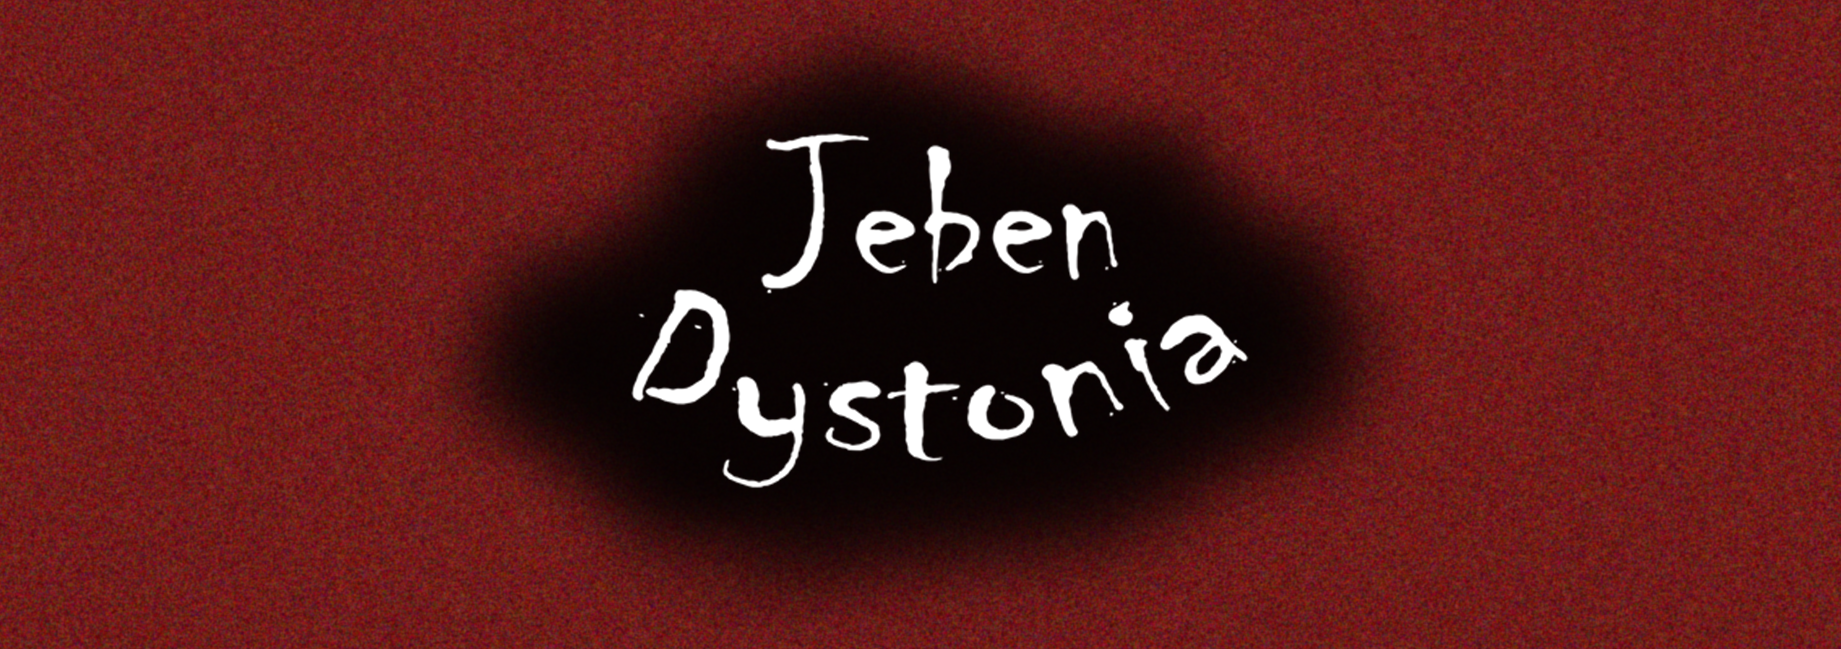 Jeben Dystonia